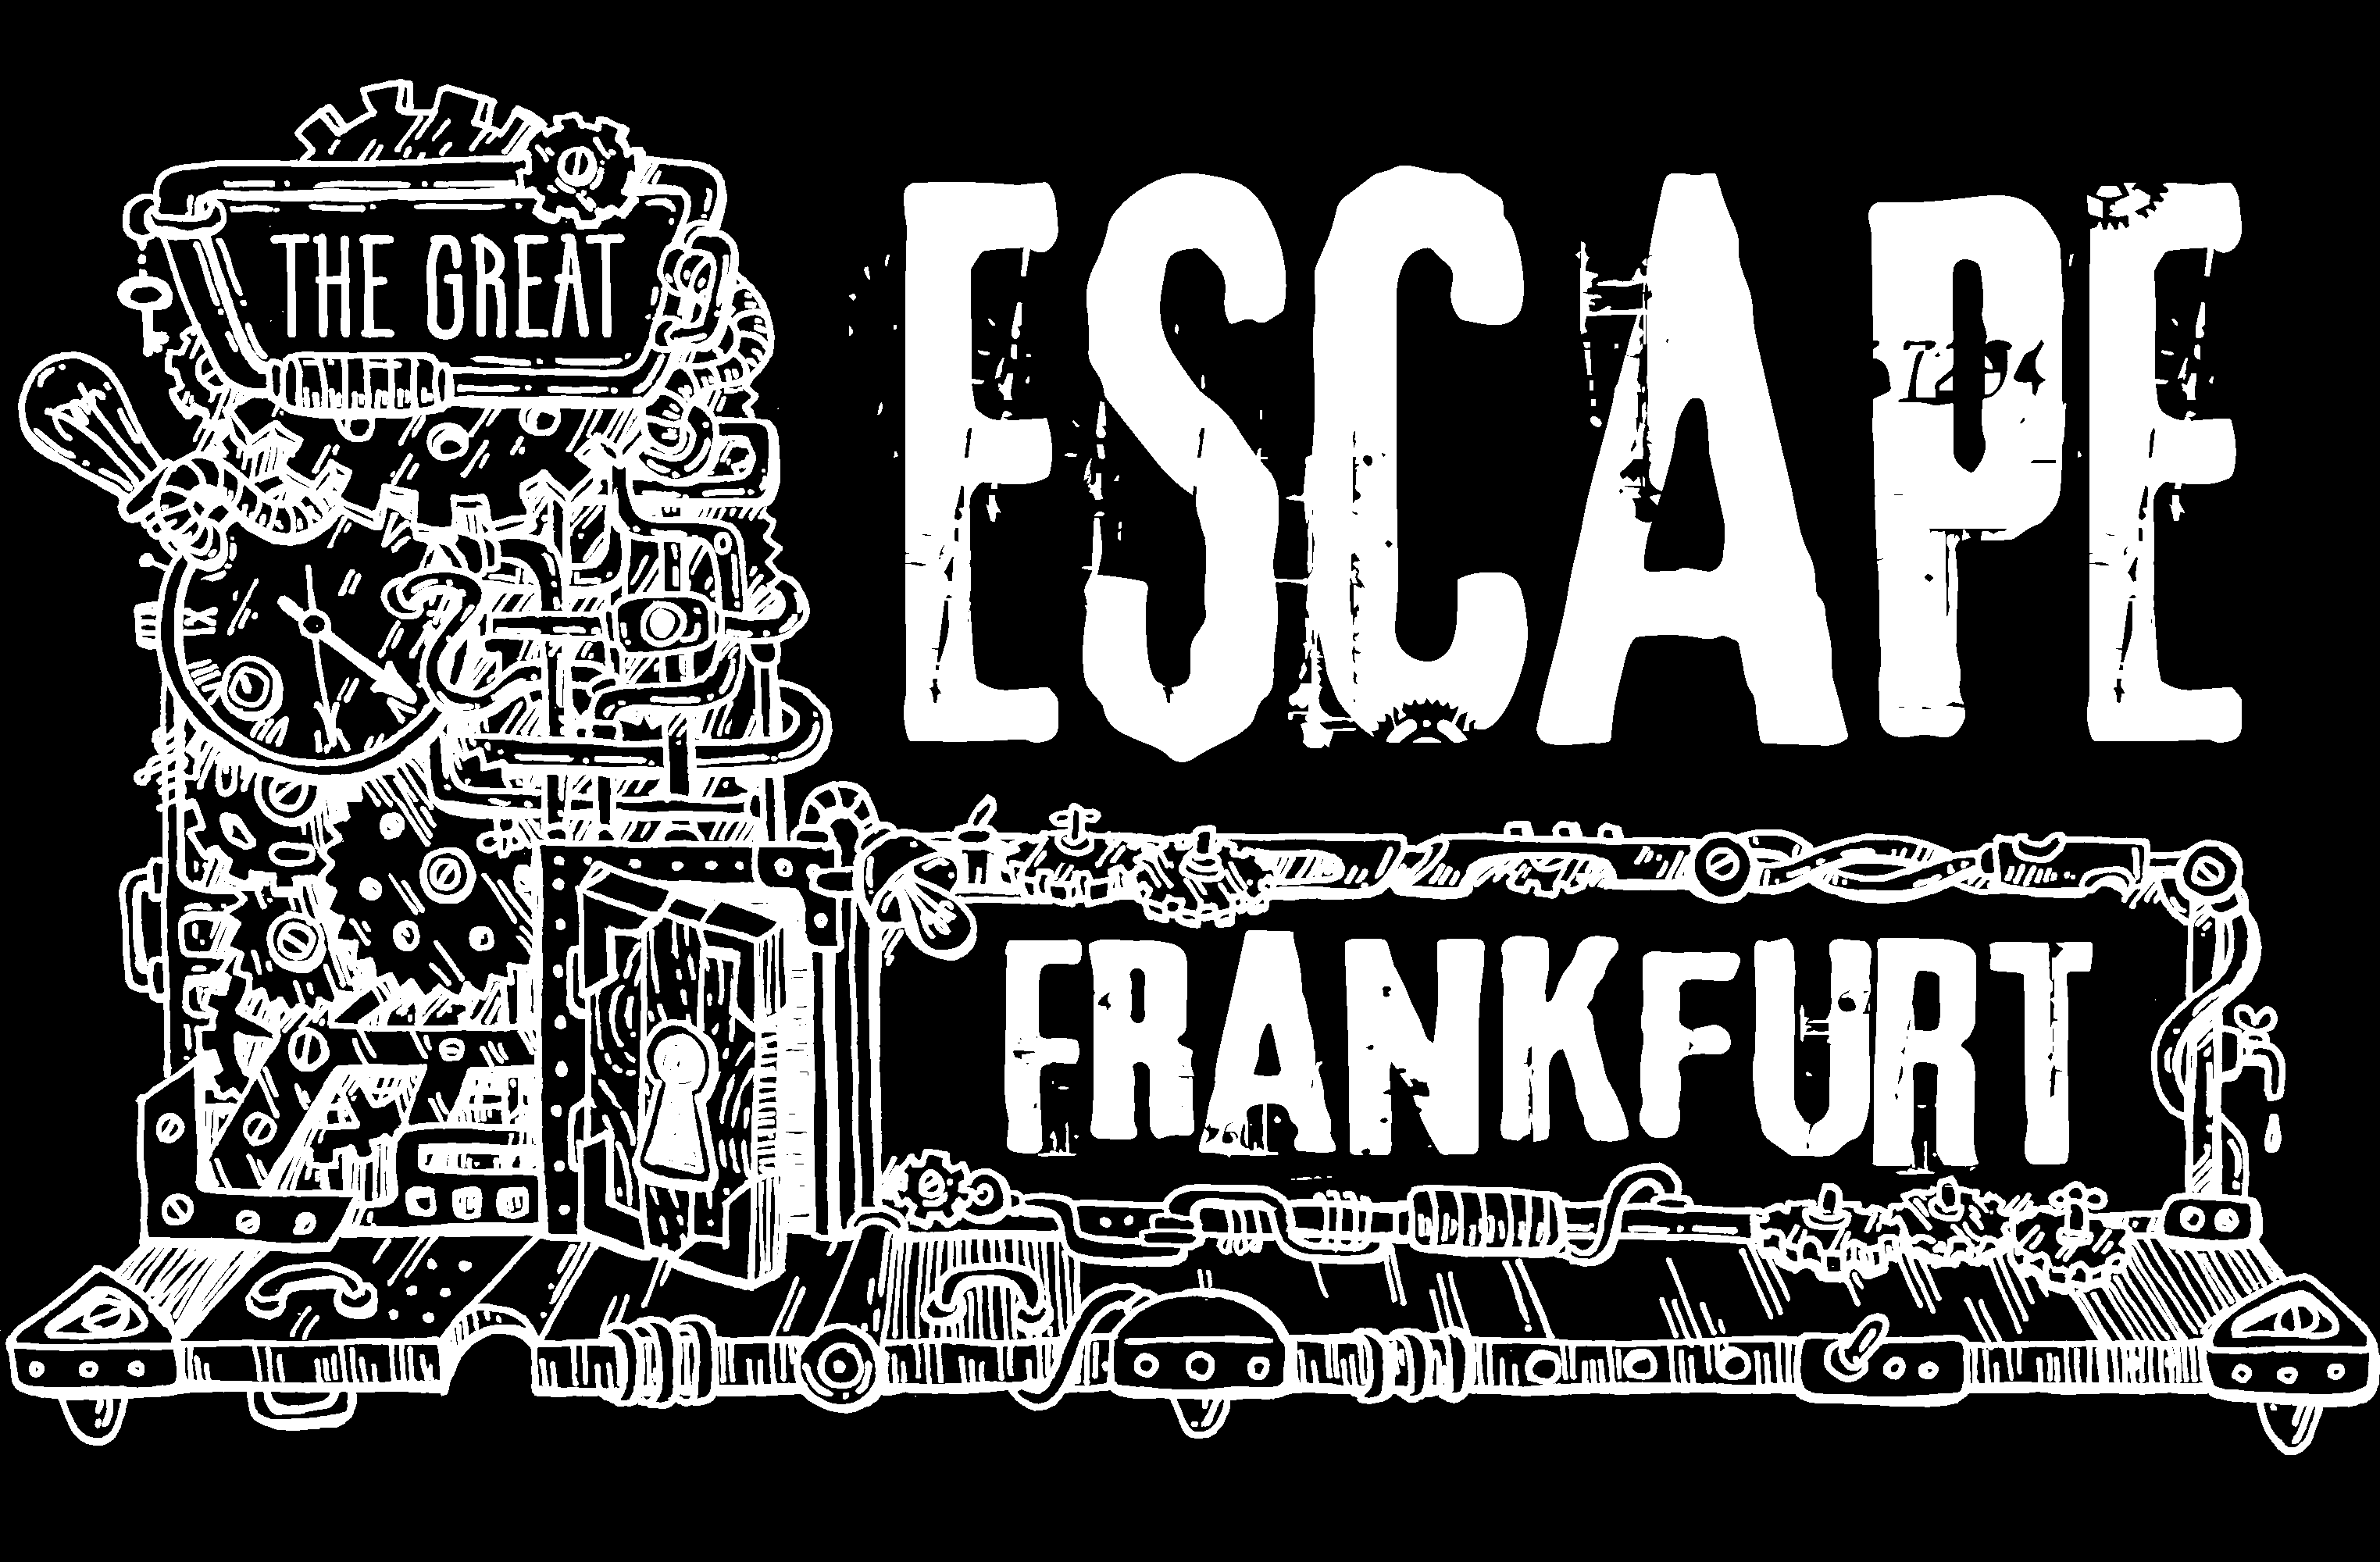 The Great Escape Frankfurt